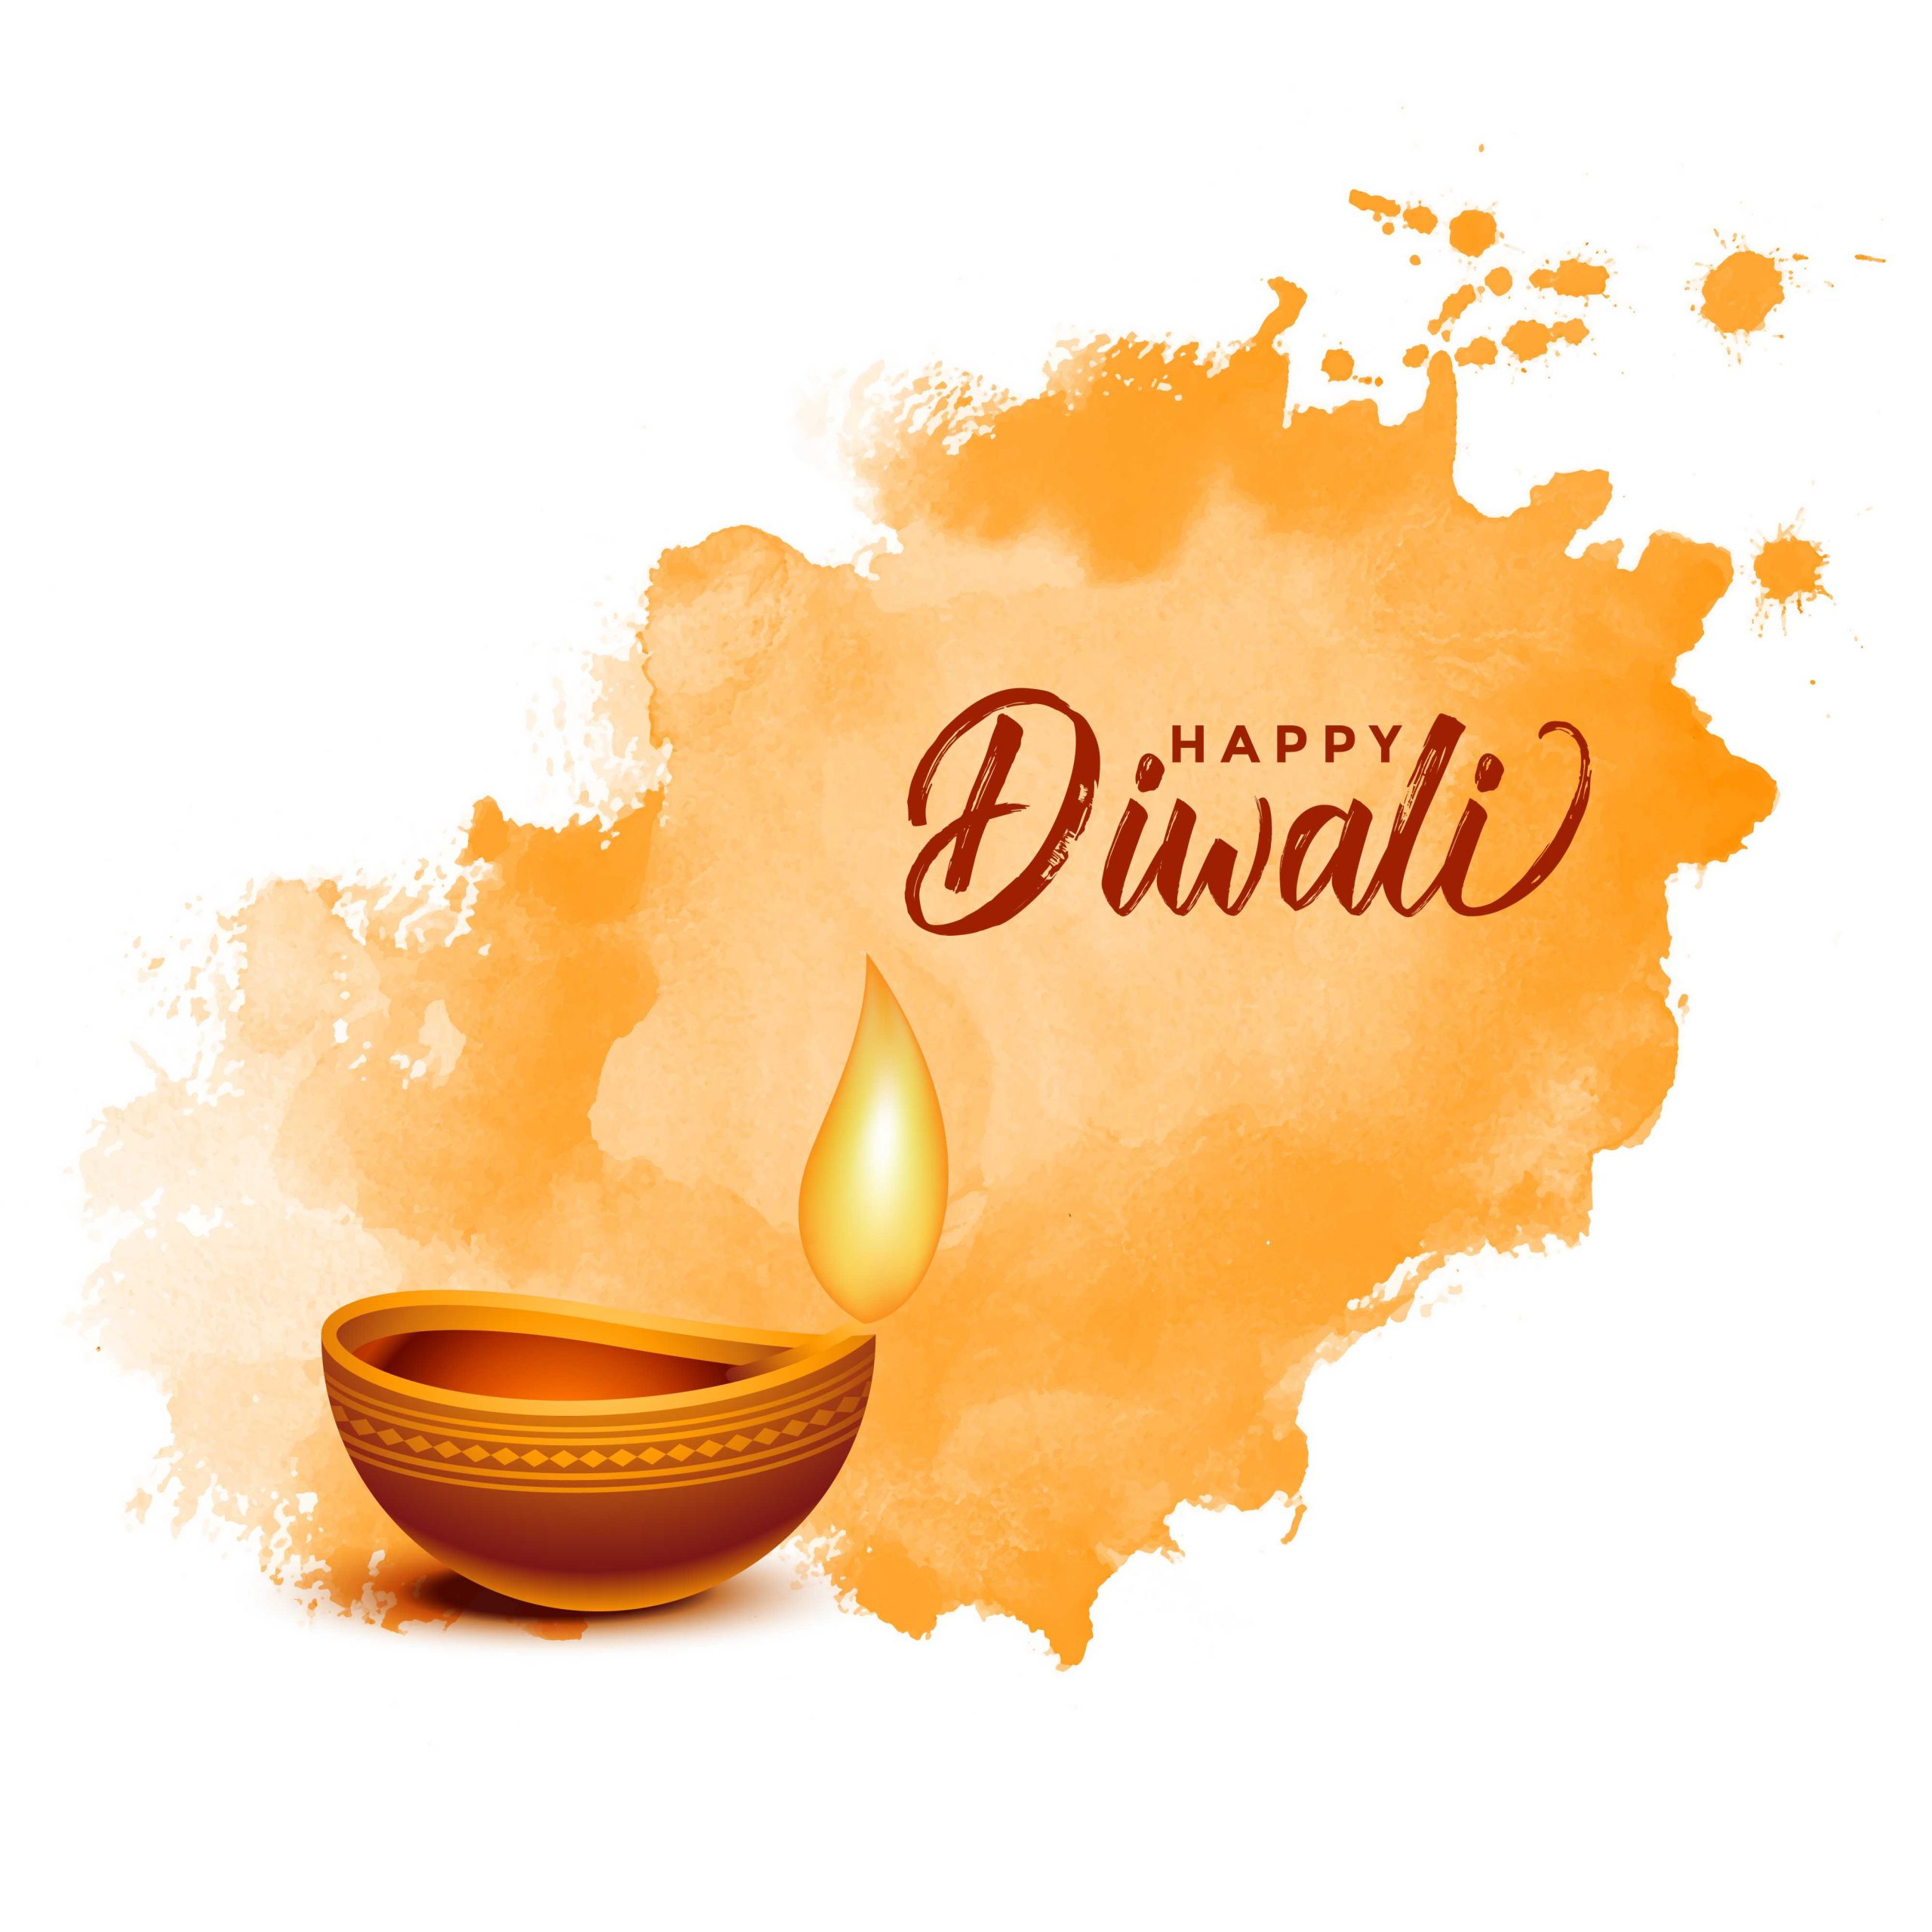 Happy Diwali pictures download 